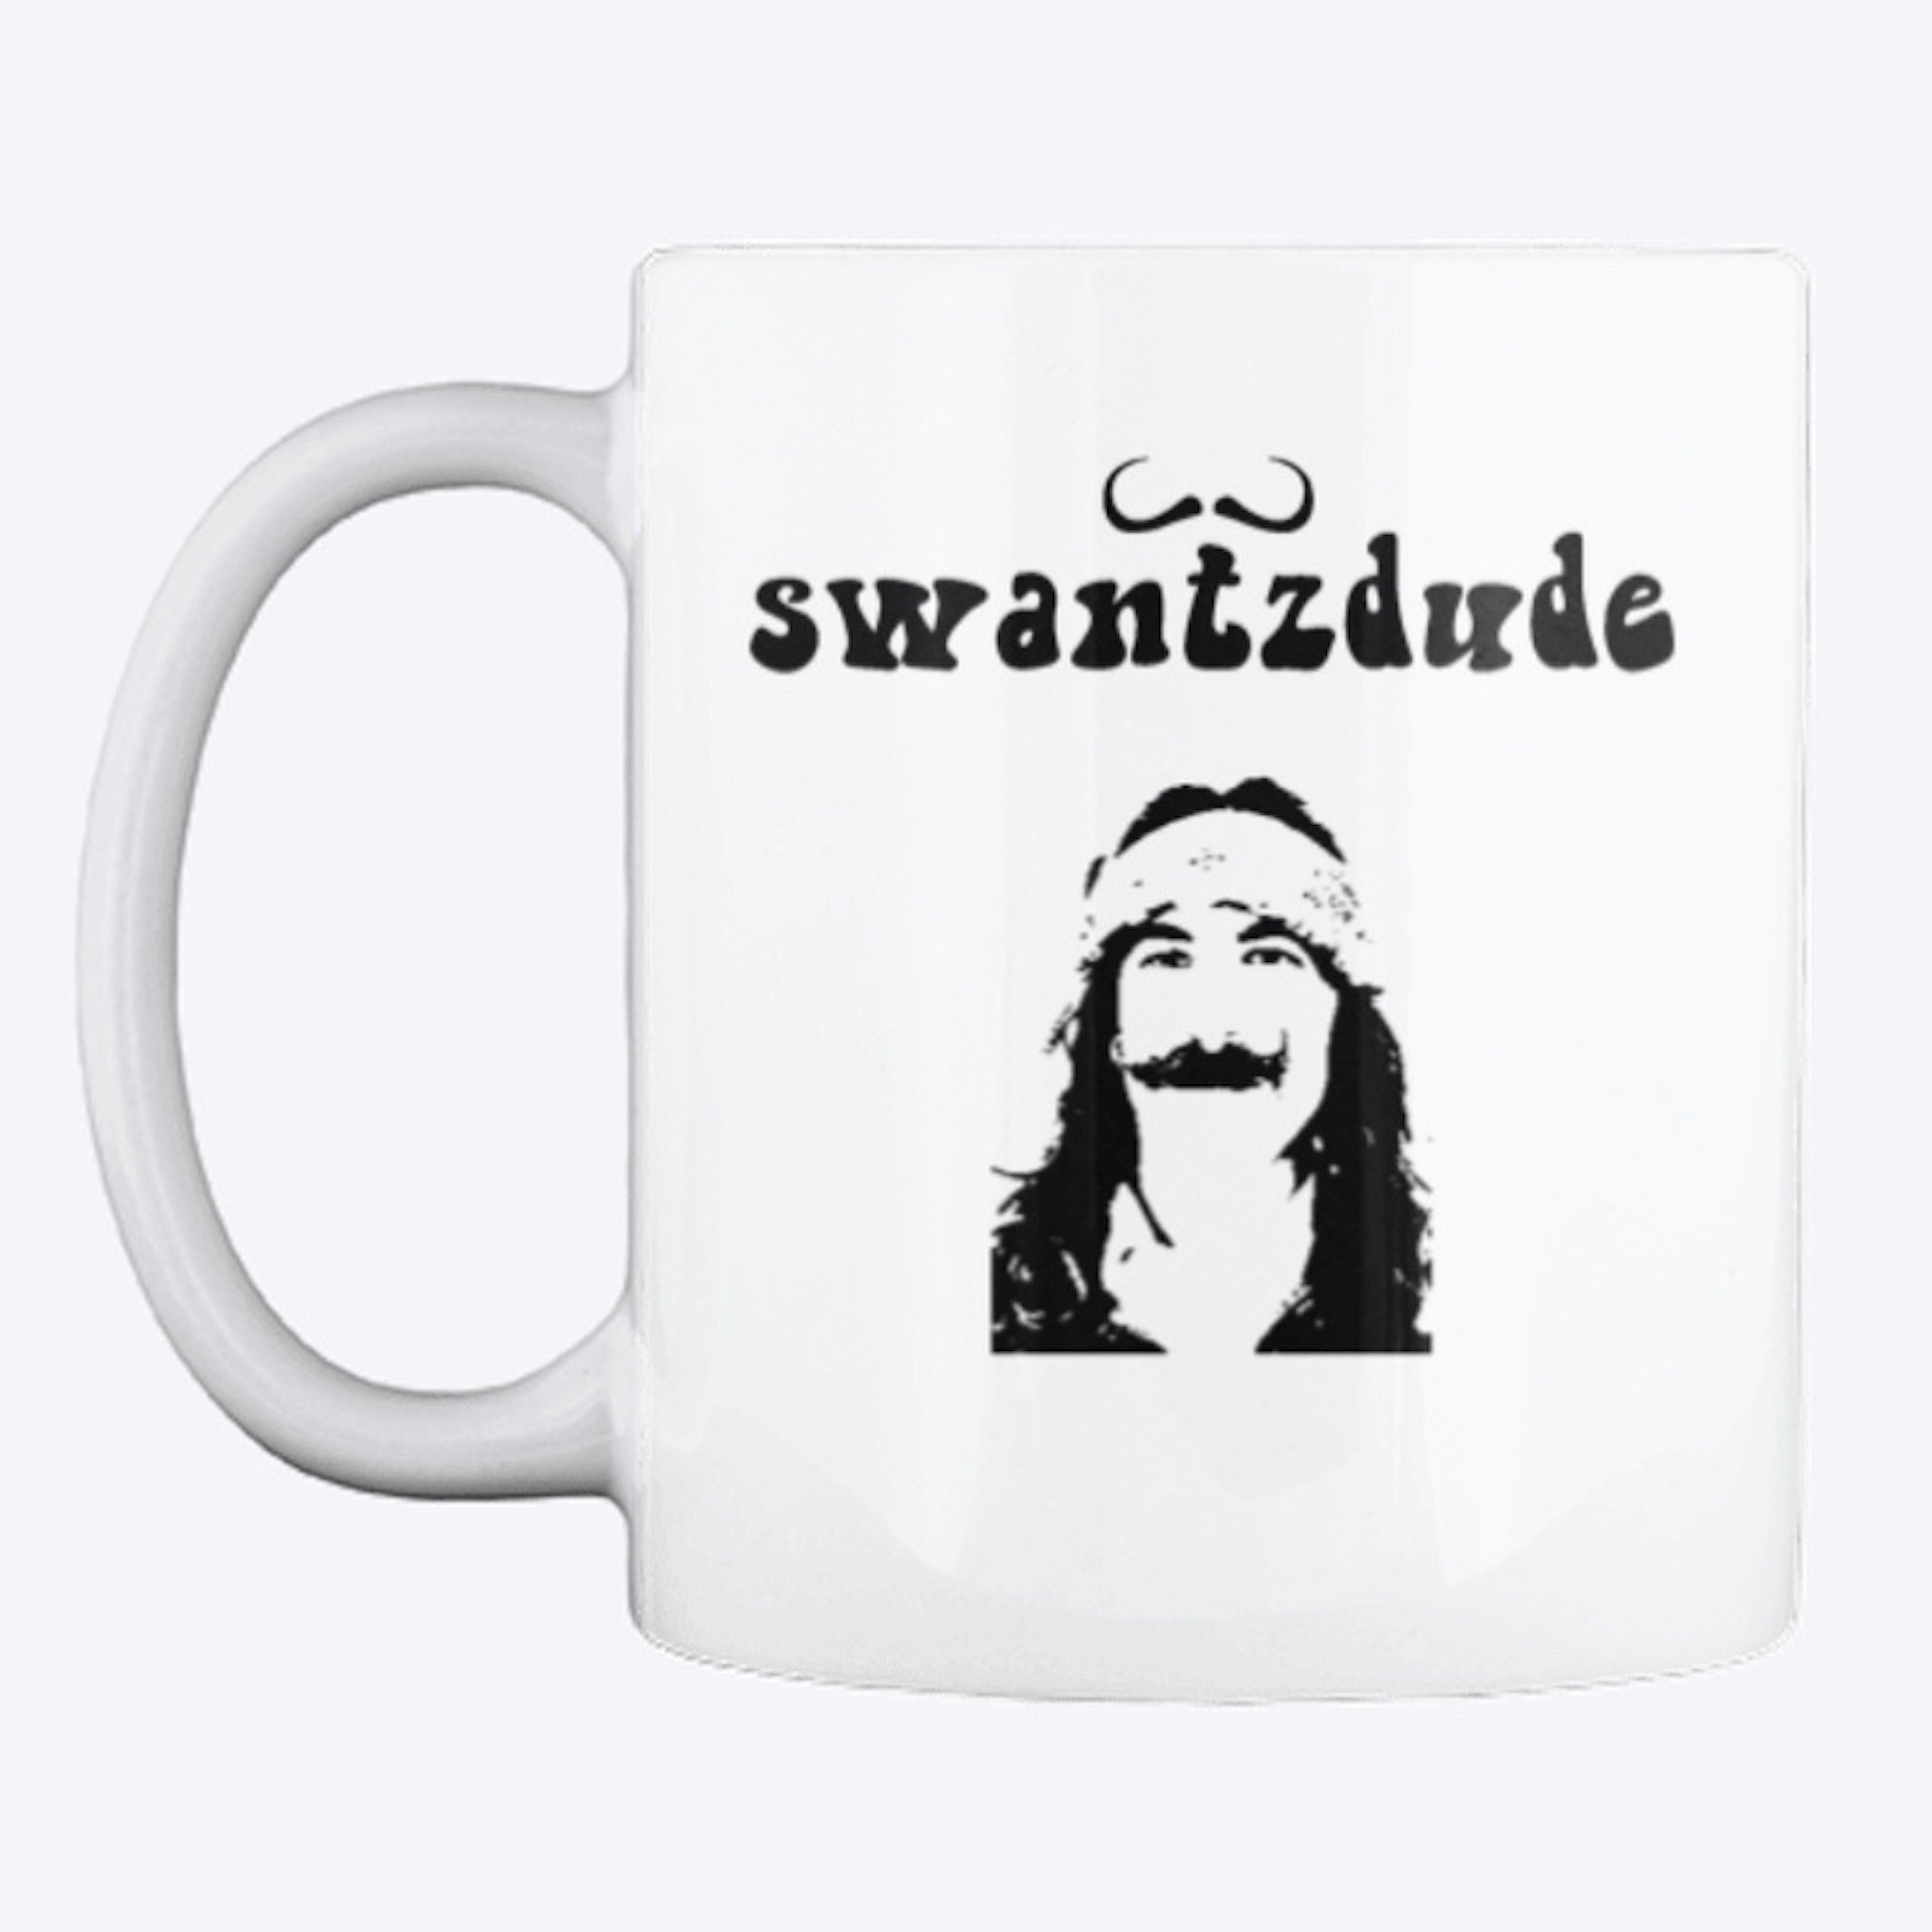 Swantz Dude Mug